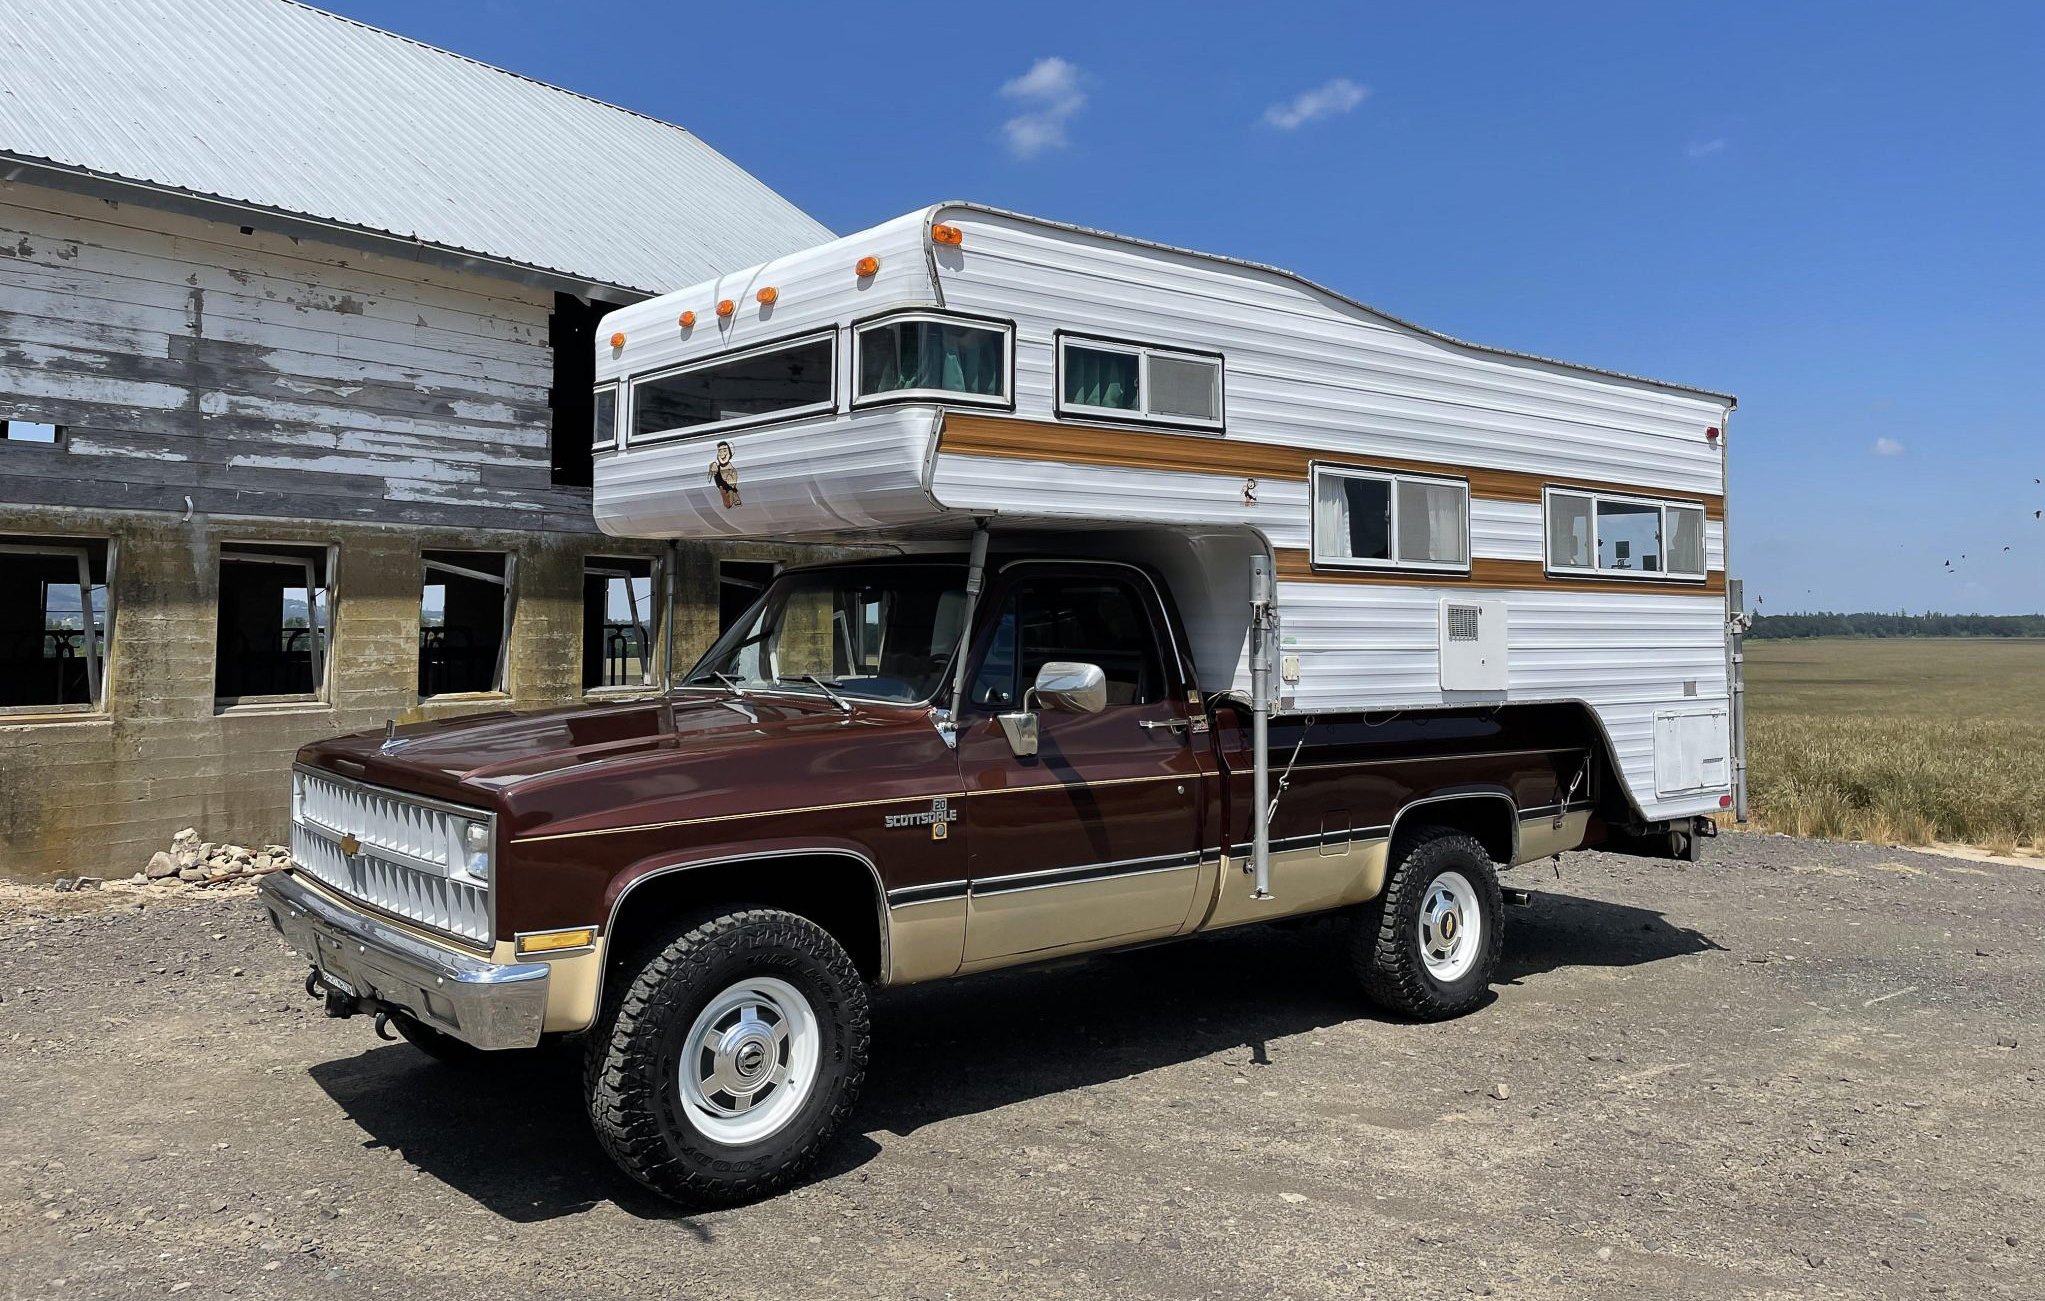 https://silodrome.com/wp-content/uploads/2022/07/Chevrolet-K20-Pickup-Truck-Camper.jpg